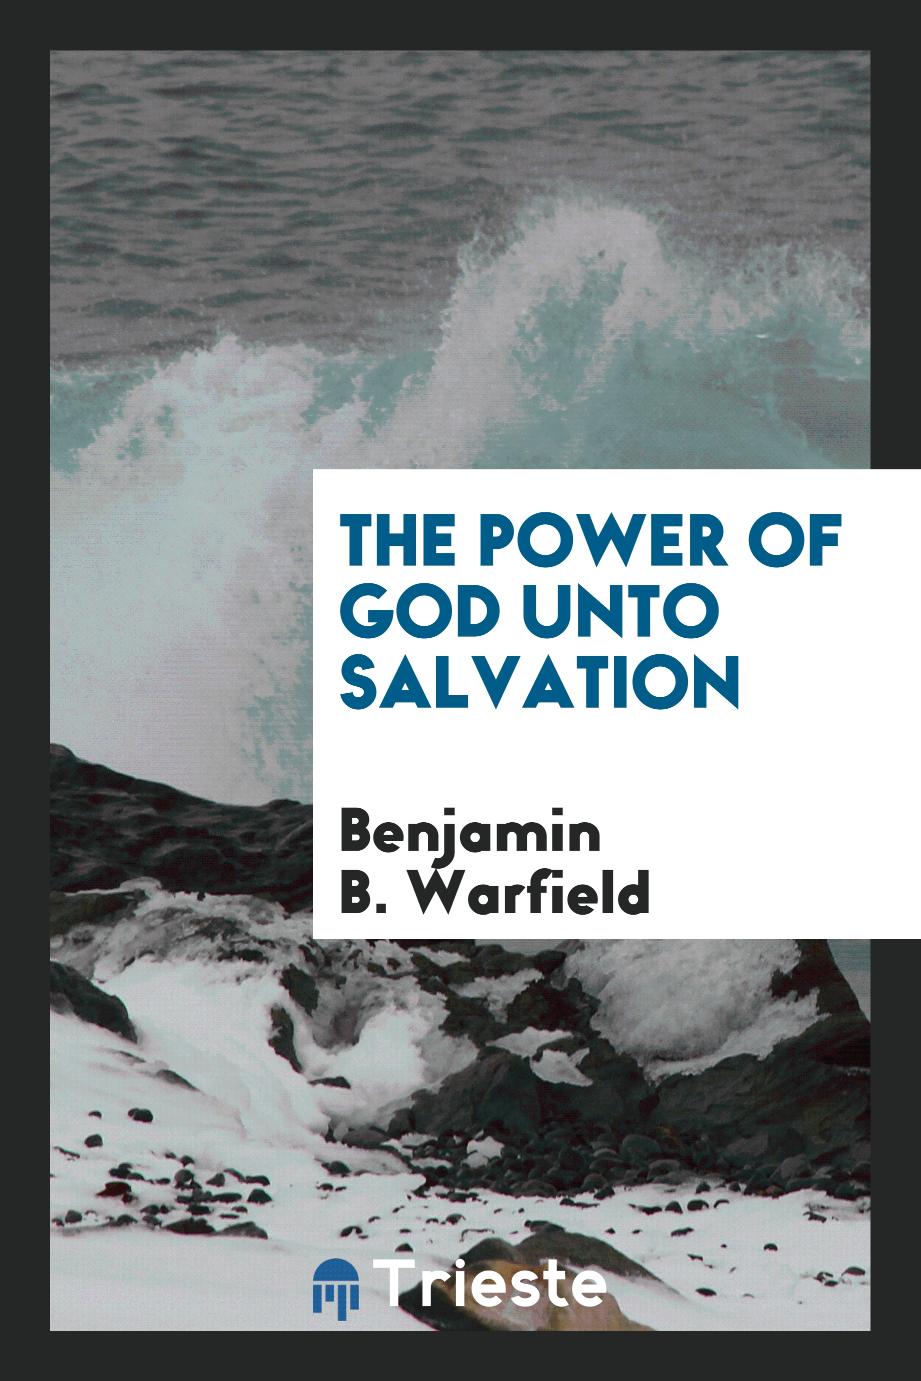 Benjamin B. Warfield - The power of God unto salvation